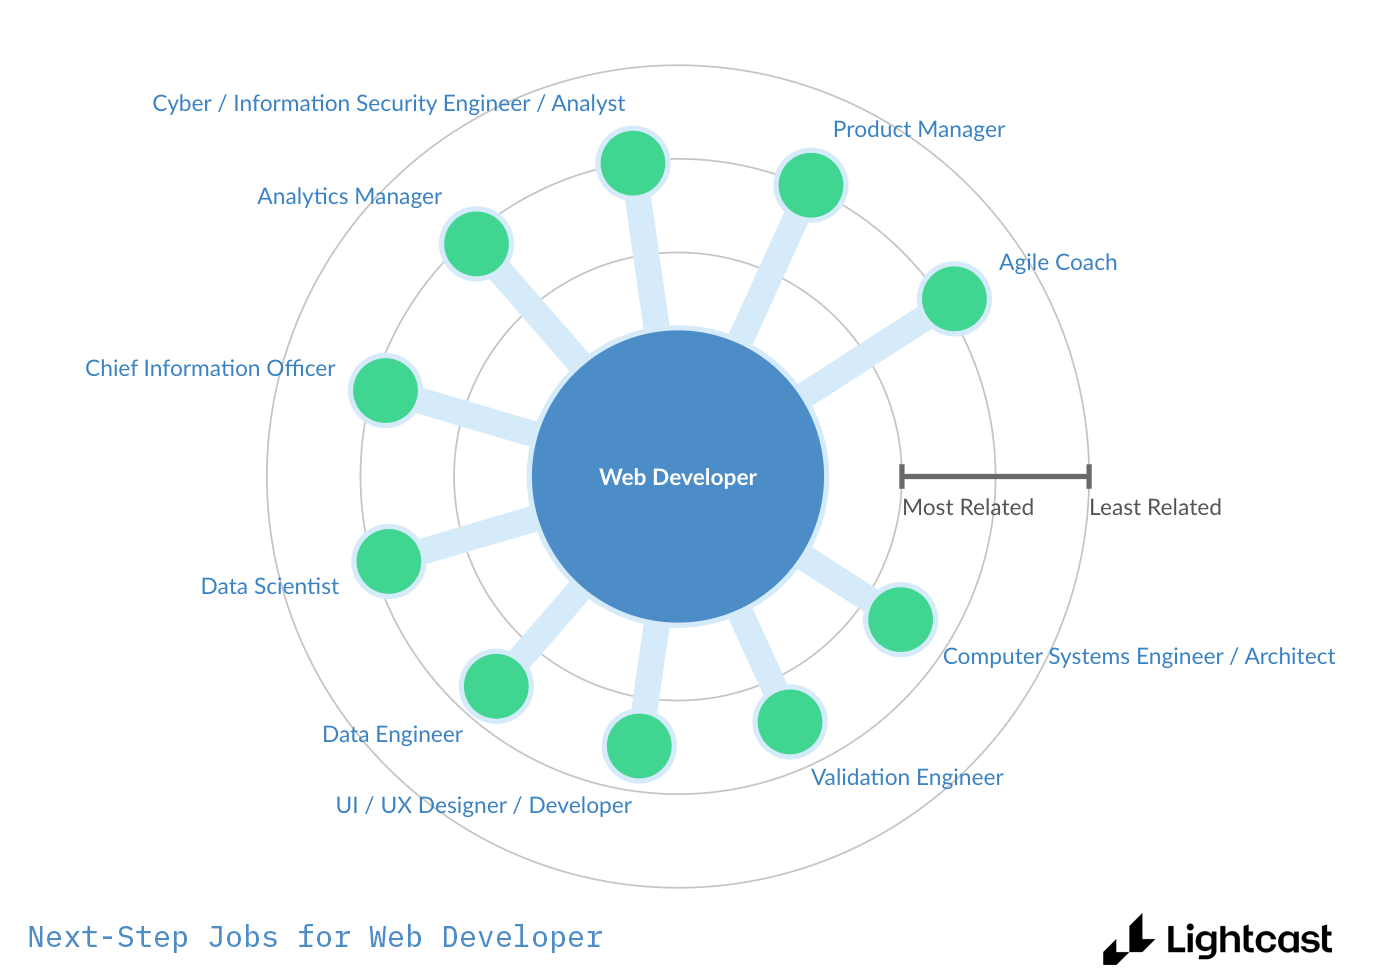 Next-step jobs for Web Developer